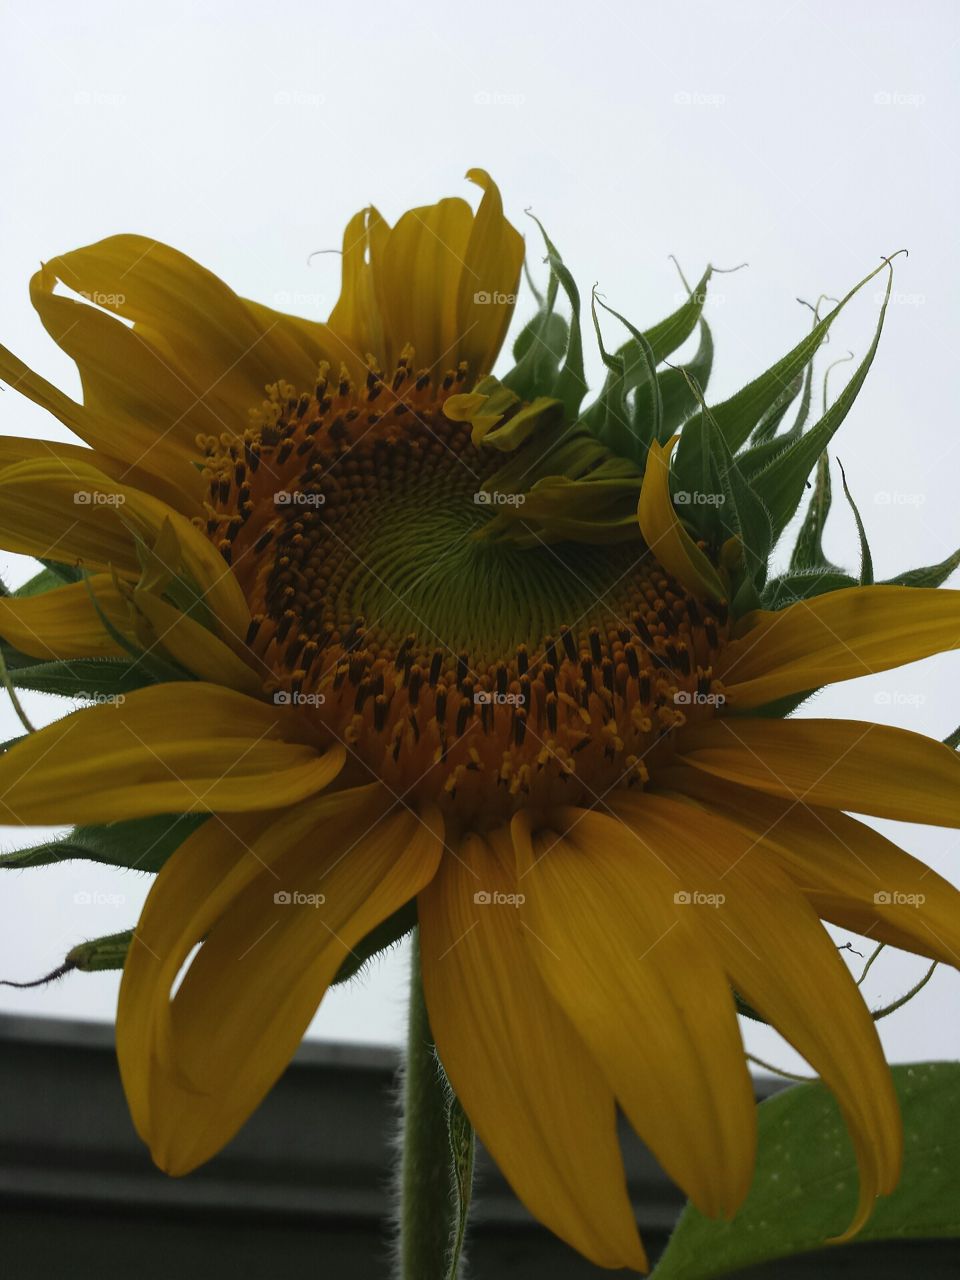 sunflower blooming